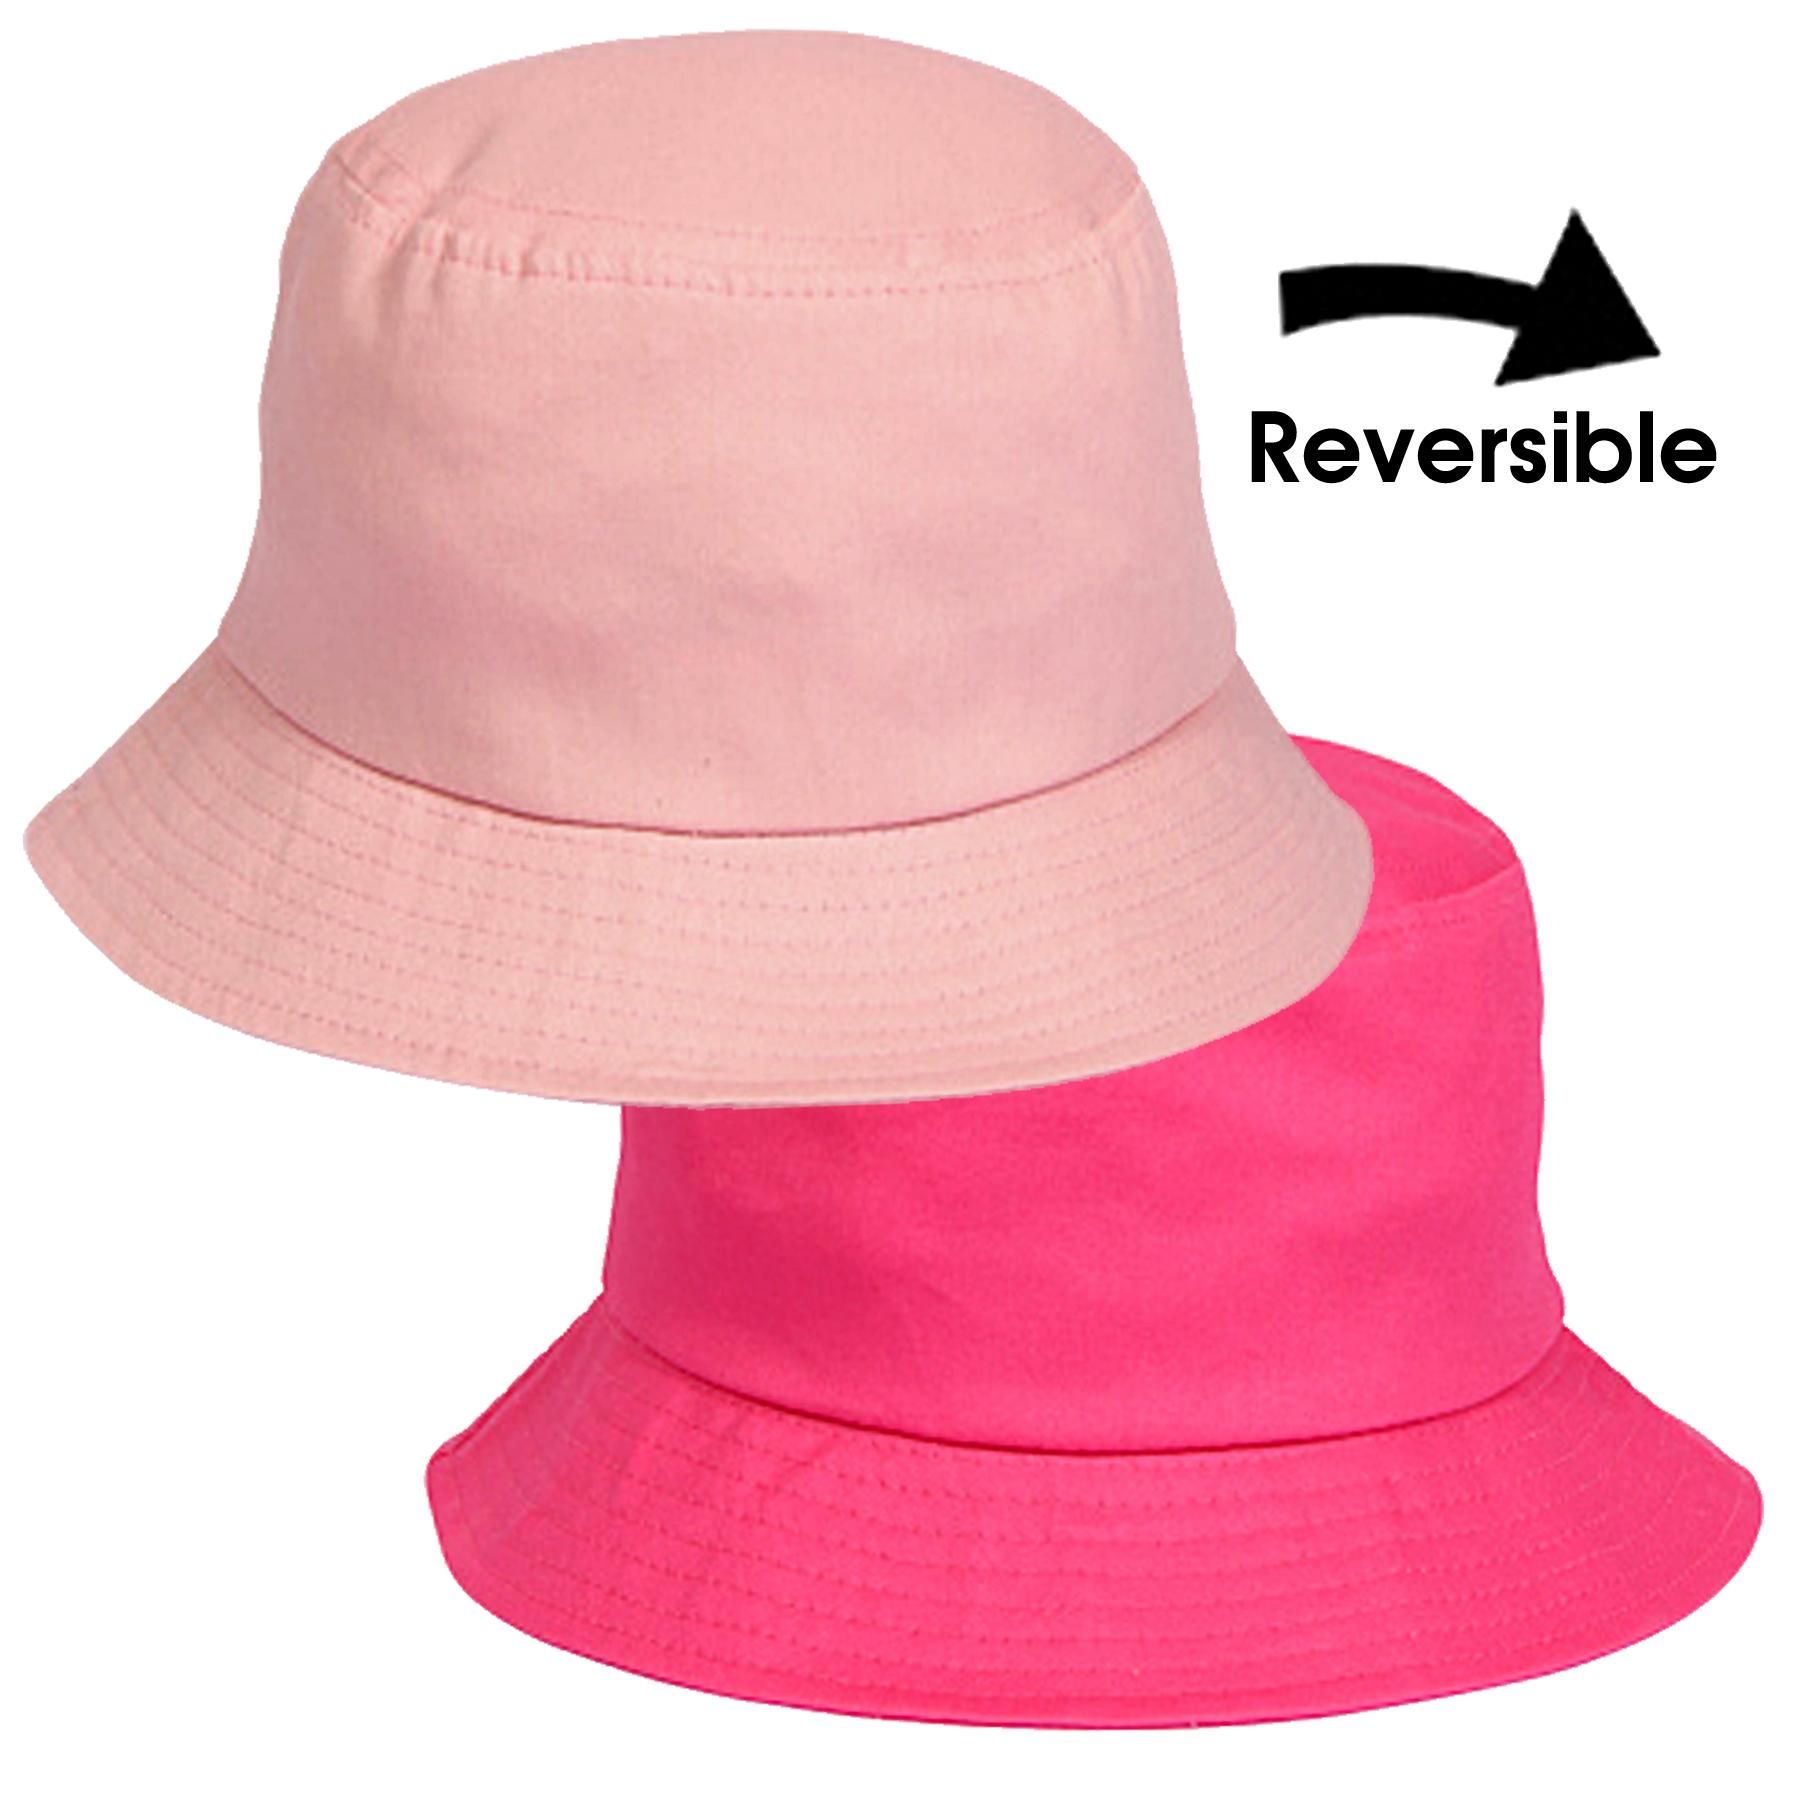 Bartleby Kids Cotton Reversible Cerise & Pink Bucket Hat